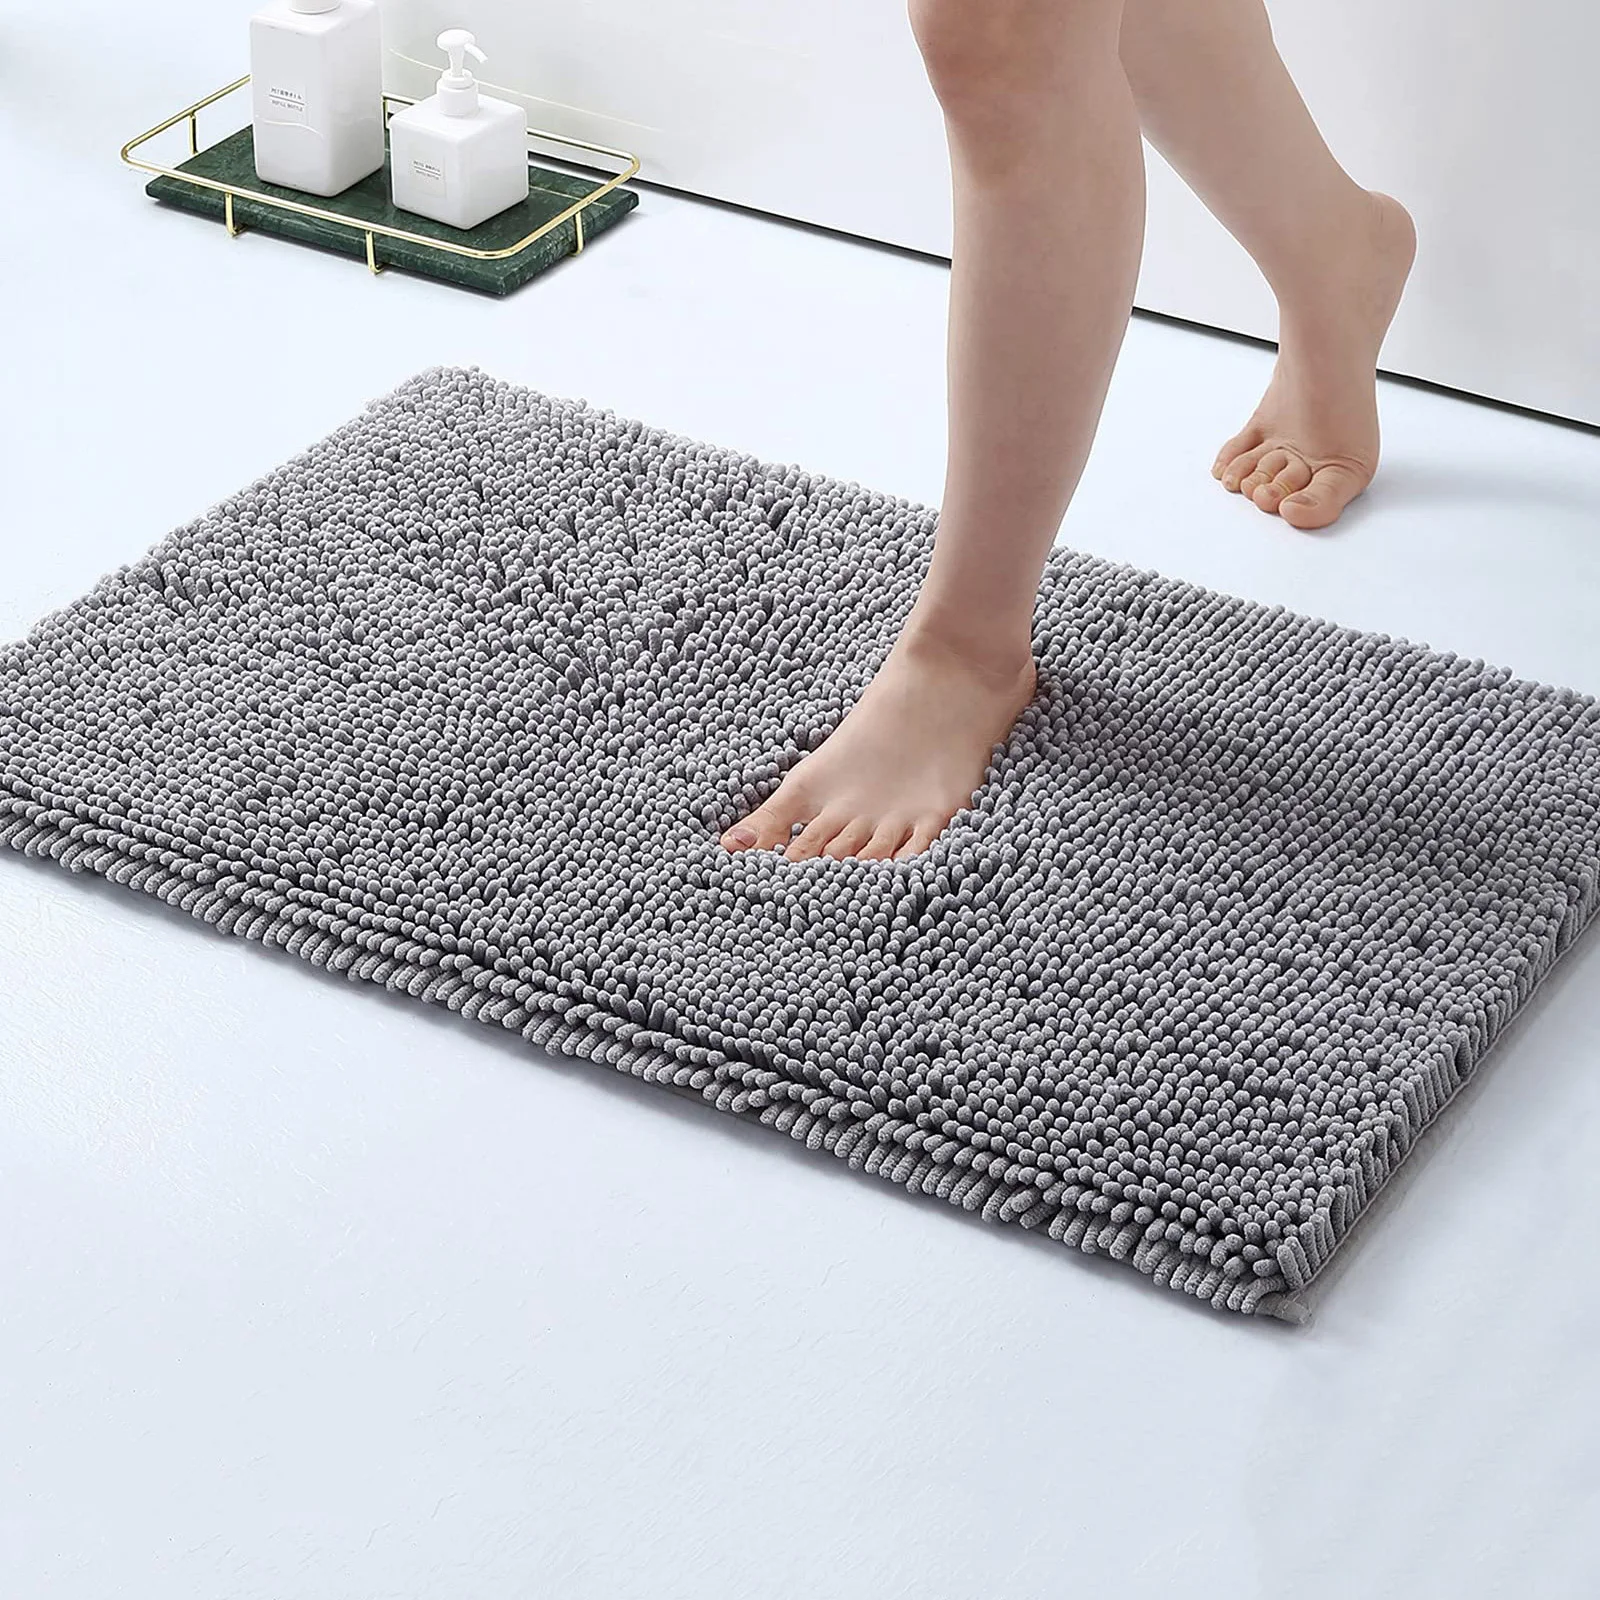 https://ae01.alicdn.com/kf/Sbe44aedcb2aa4fb59e8cf386e51287adI/Homaxy-Chenille-Bath-Mat-Thicken-Non-Slip-Bathroom-Rug-Soft-Floor-Foot-Carpet-Absorbent-Quick-Dry.jpg